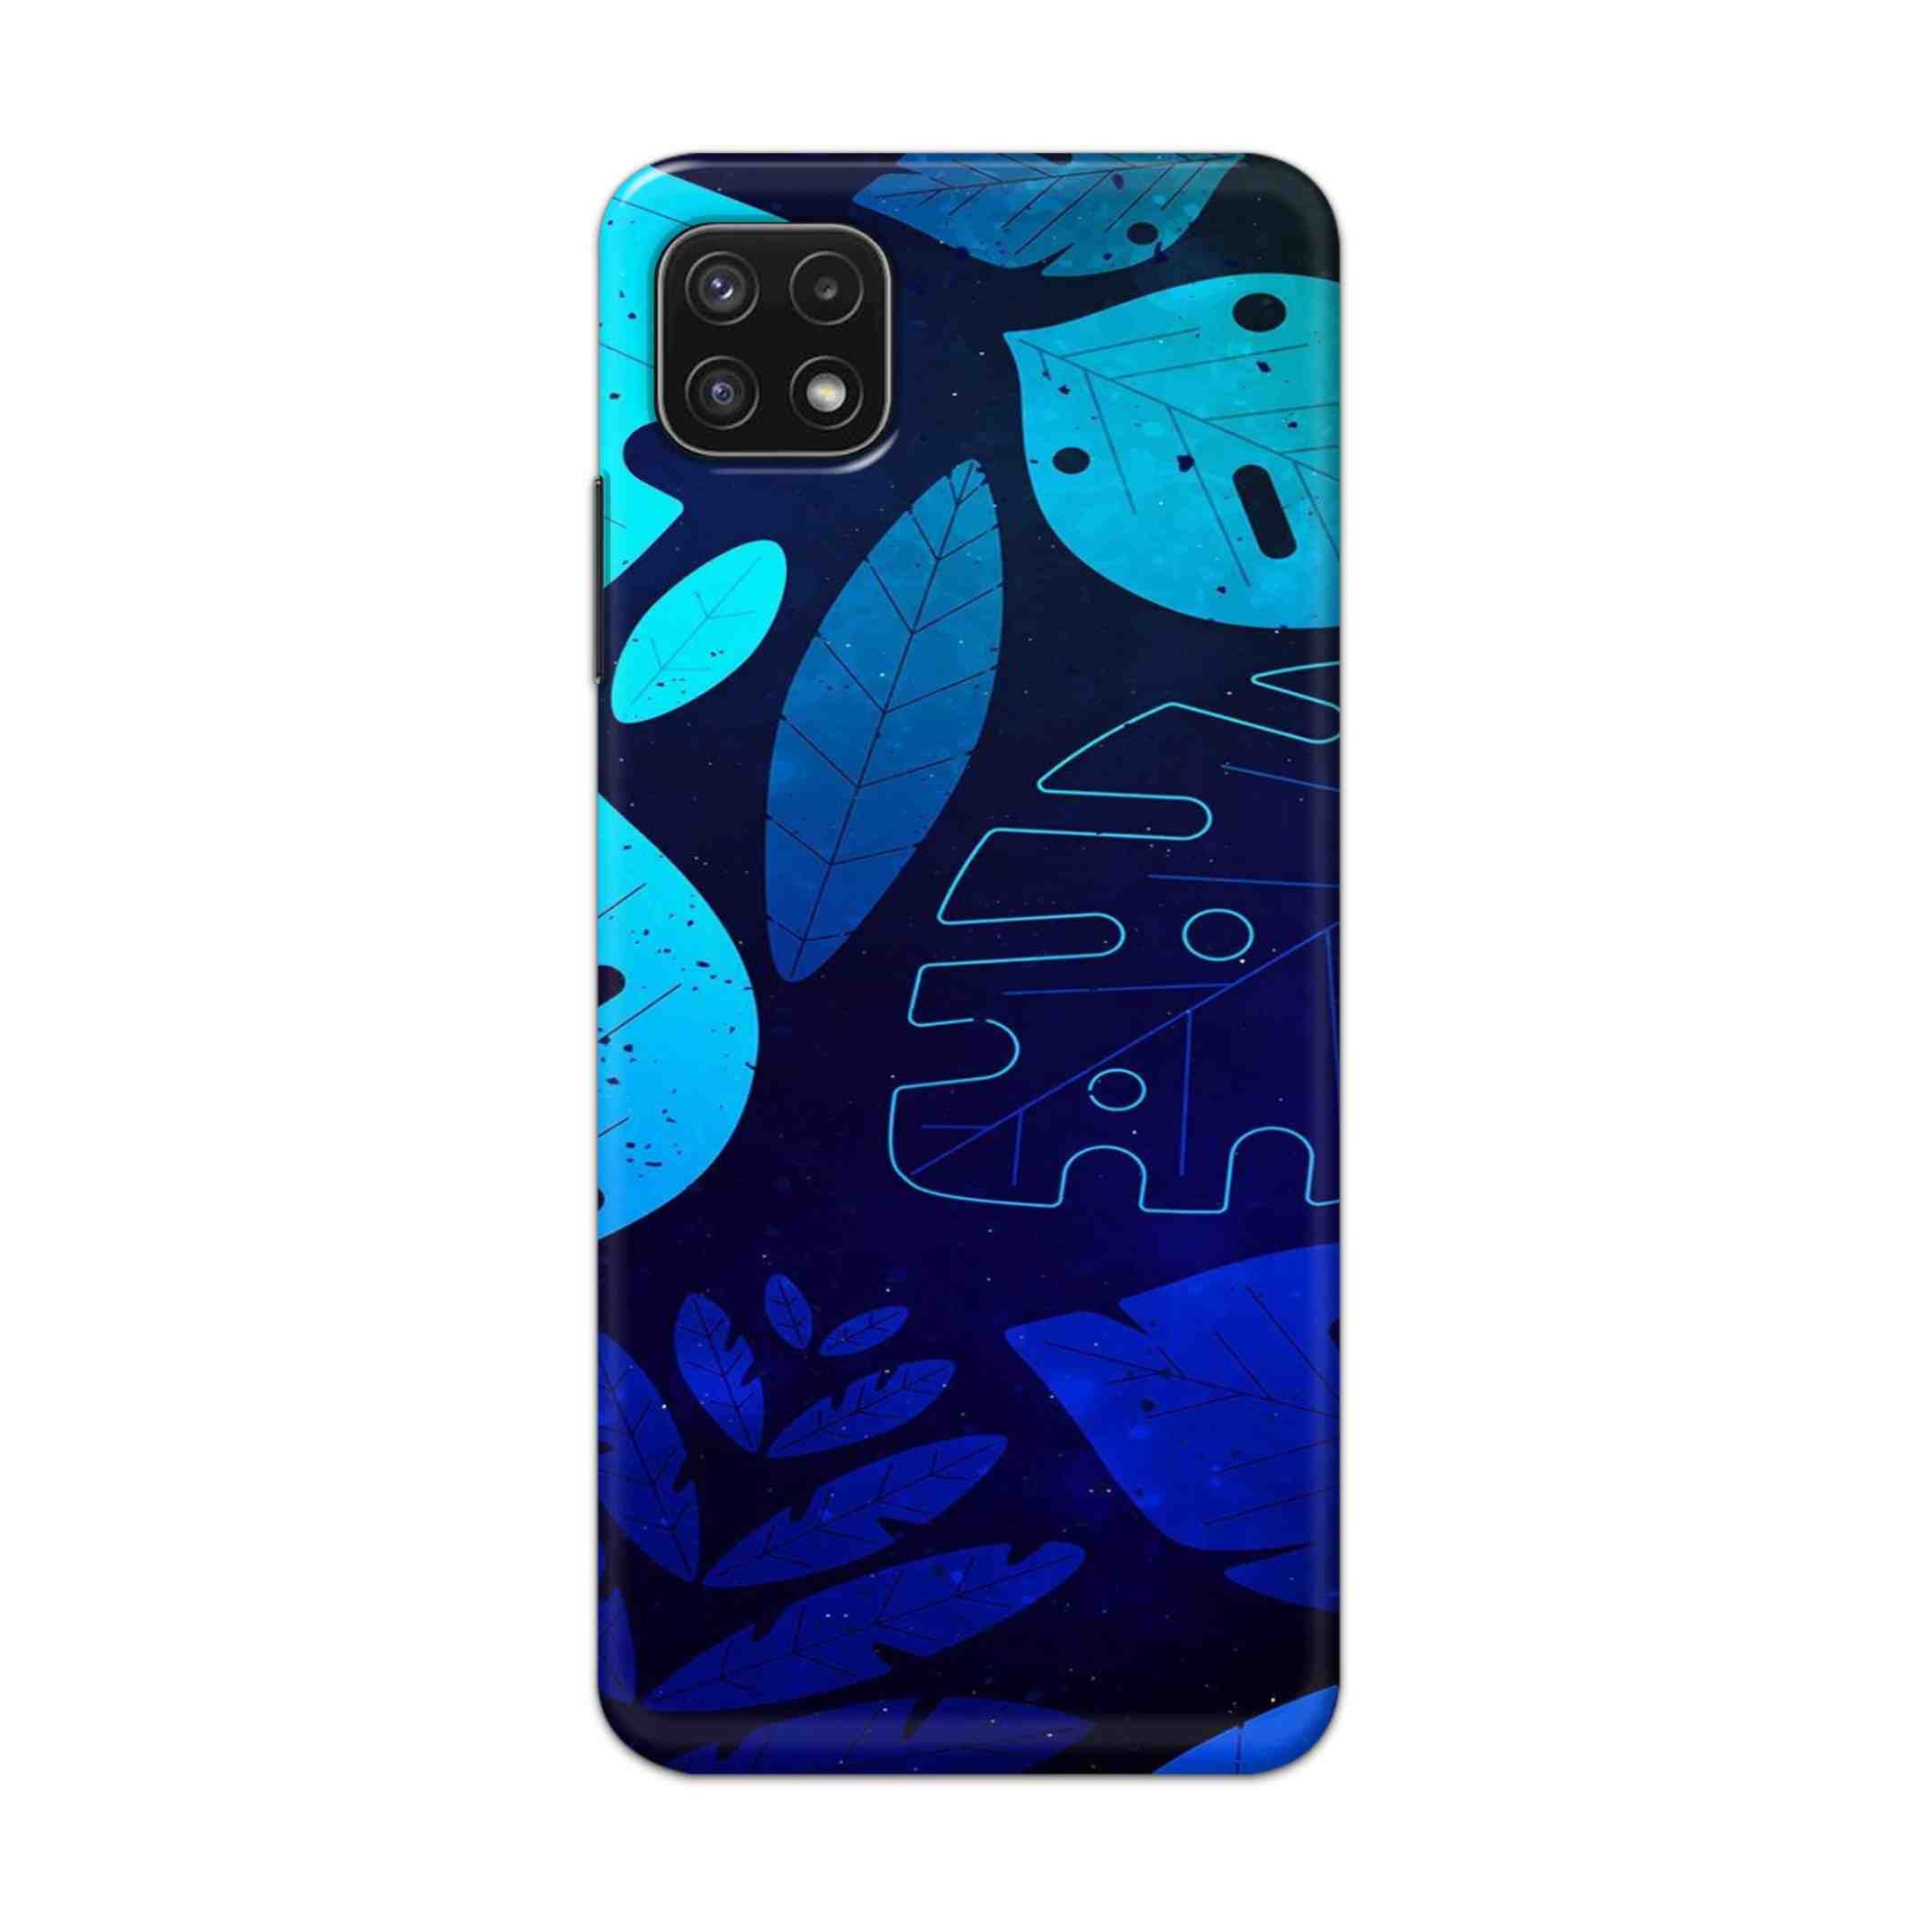 Buy Neon Leaf Hard Back Mobile Phone Case Cover For Samsung A22 5G Online